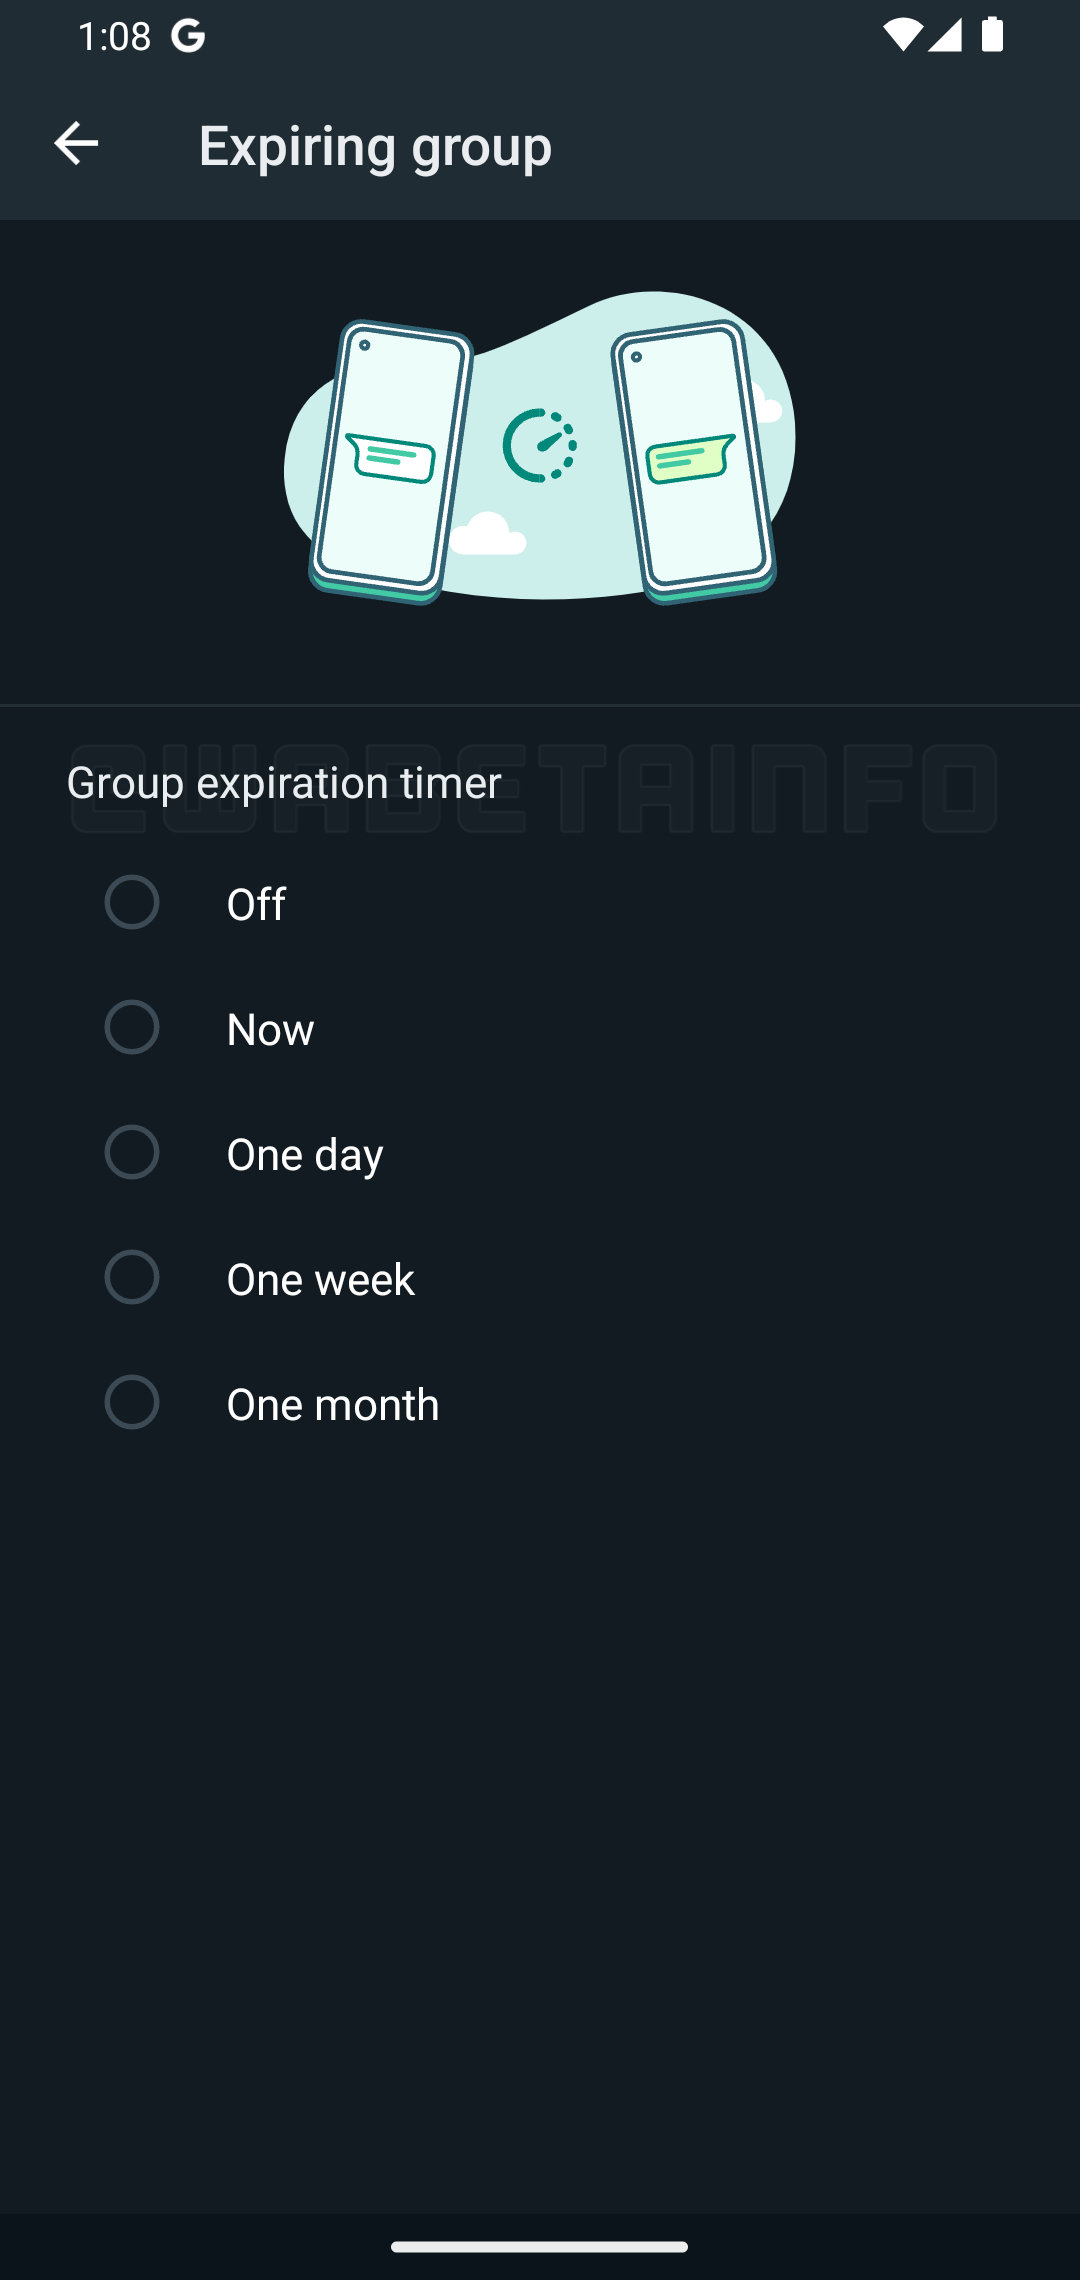 WhatsApp Expiring Groups Feature